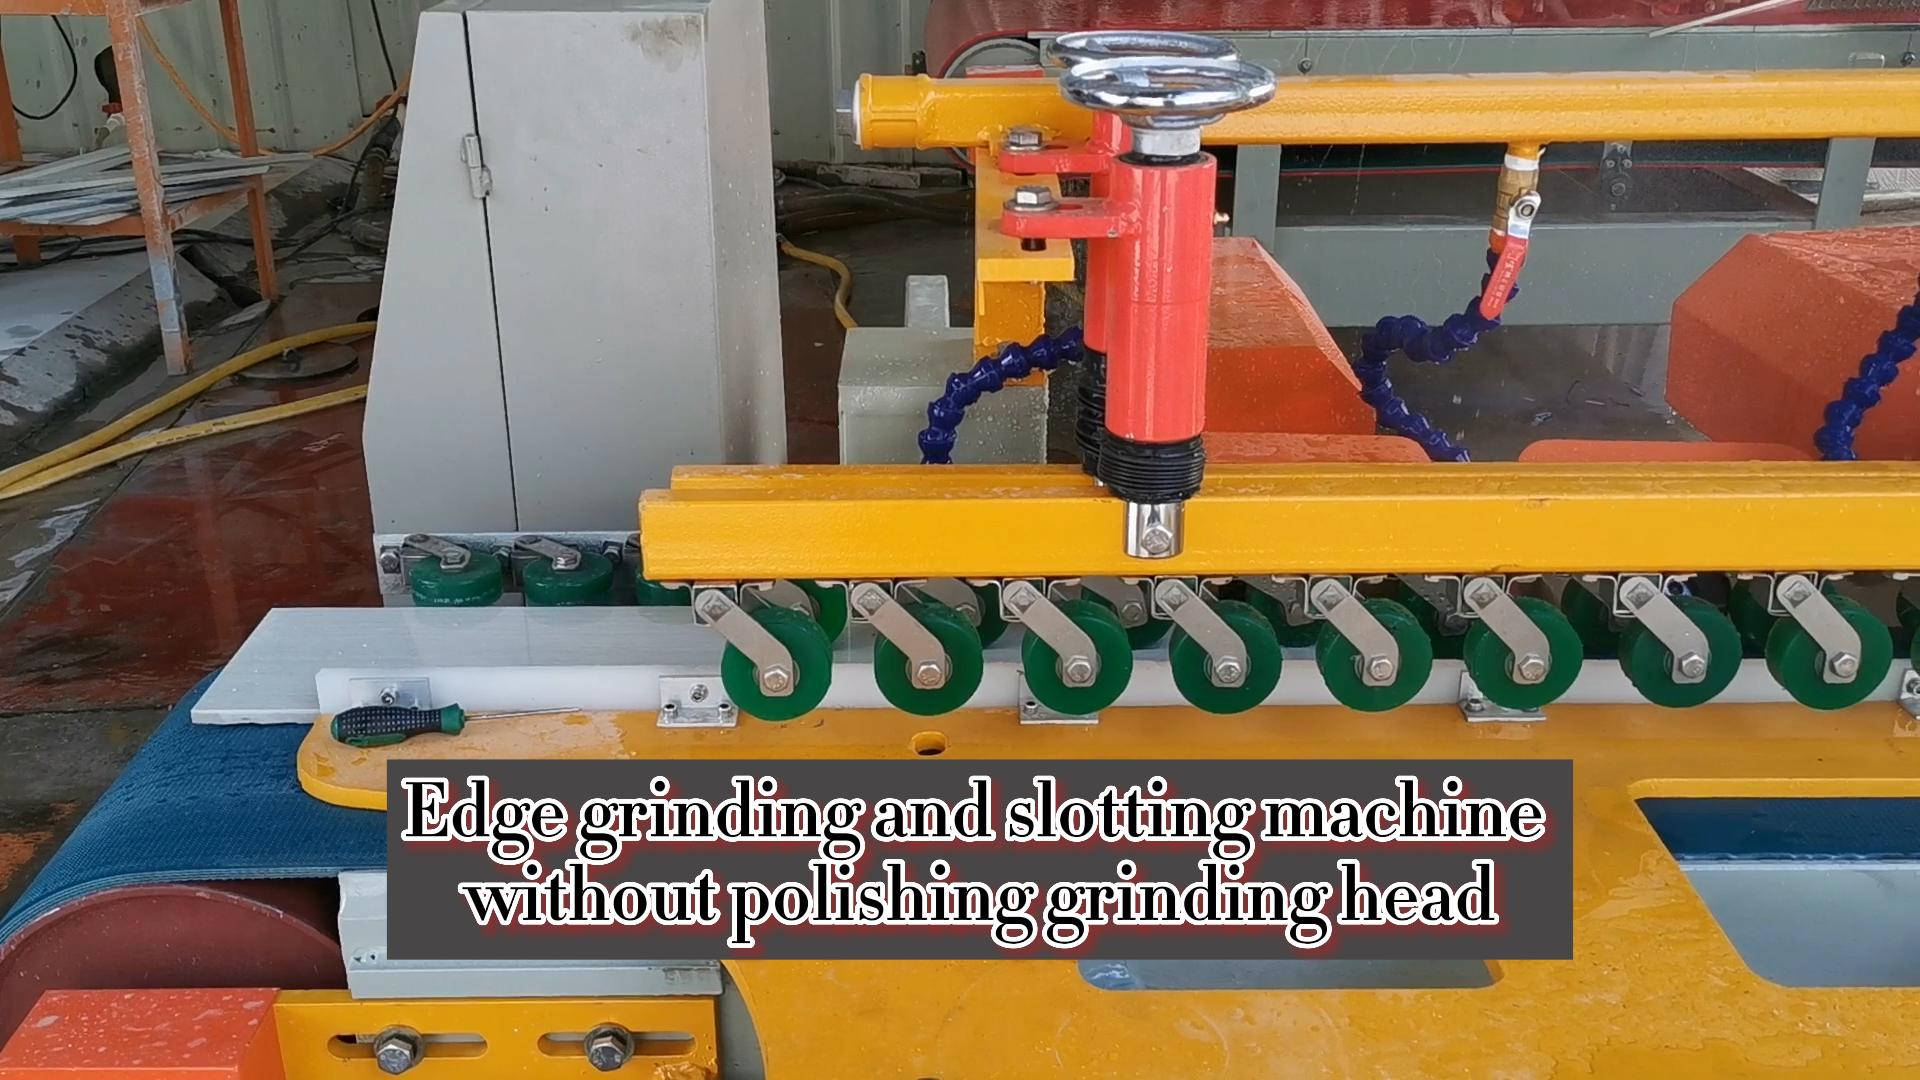 Edge grinding and slotting machine without polishing grinding head